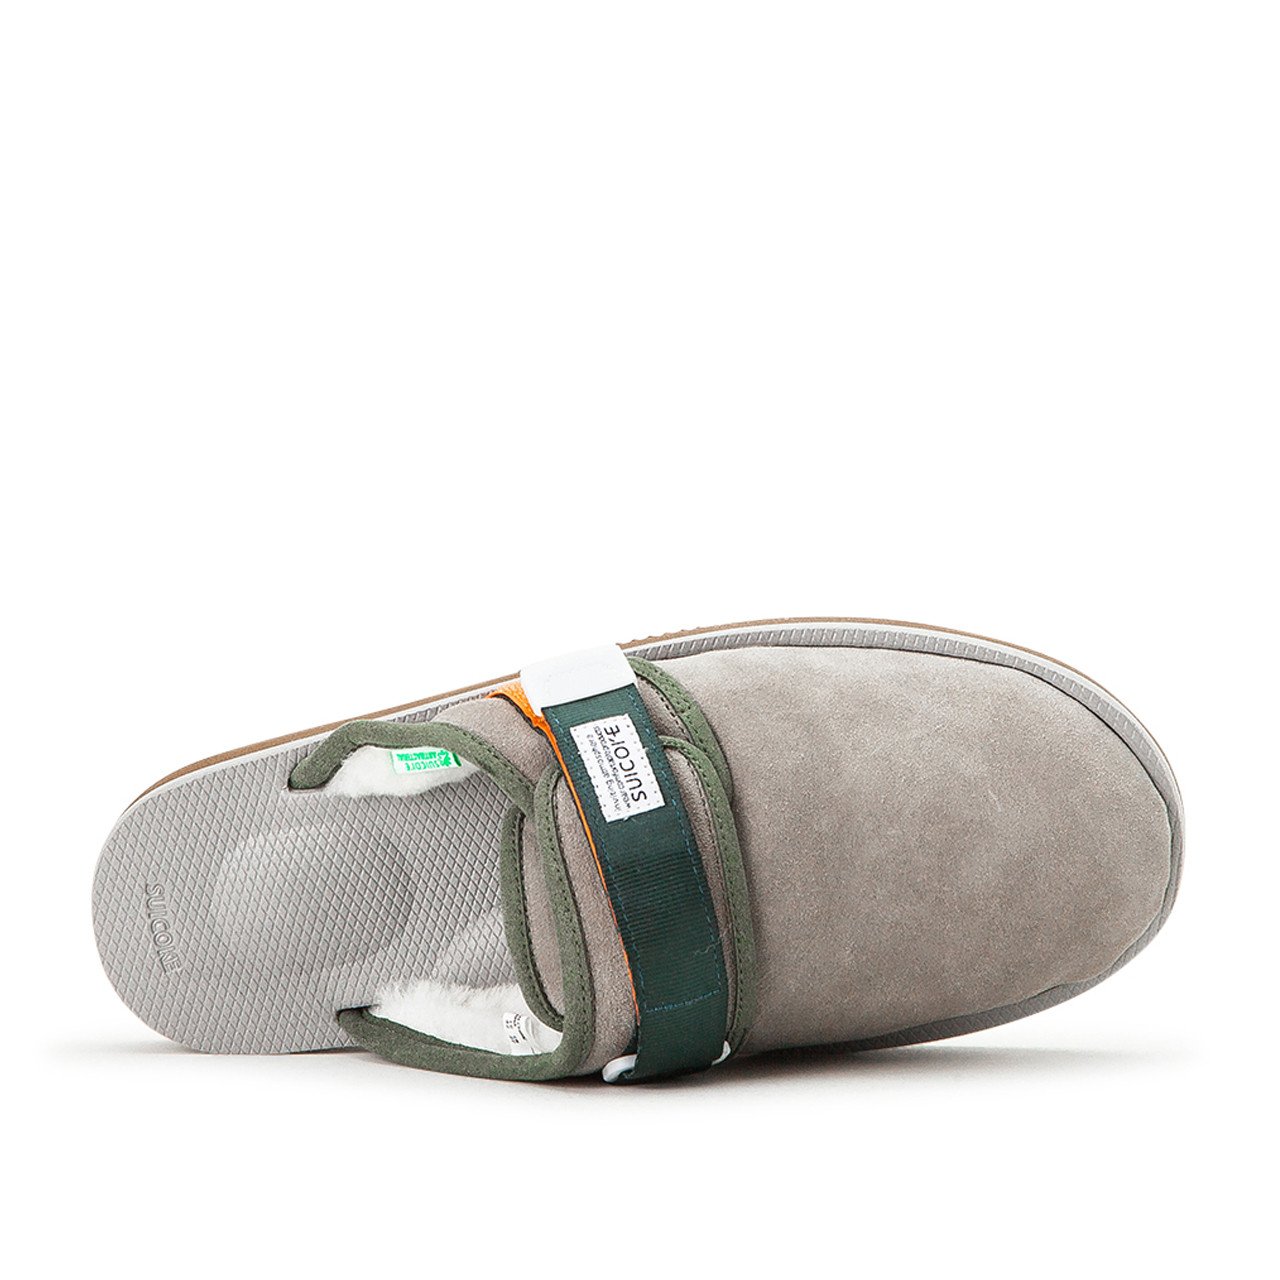 suicoke sandals zavo-mab (grey) - og-072mab-102 - a.plus - Image - 6